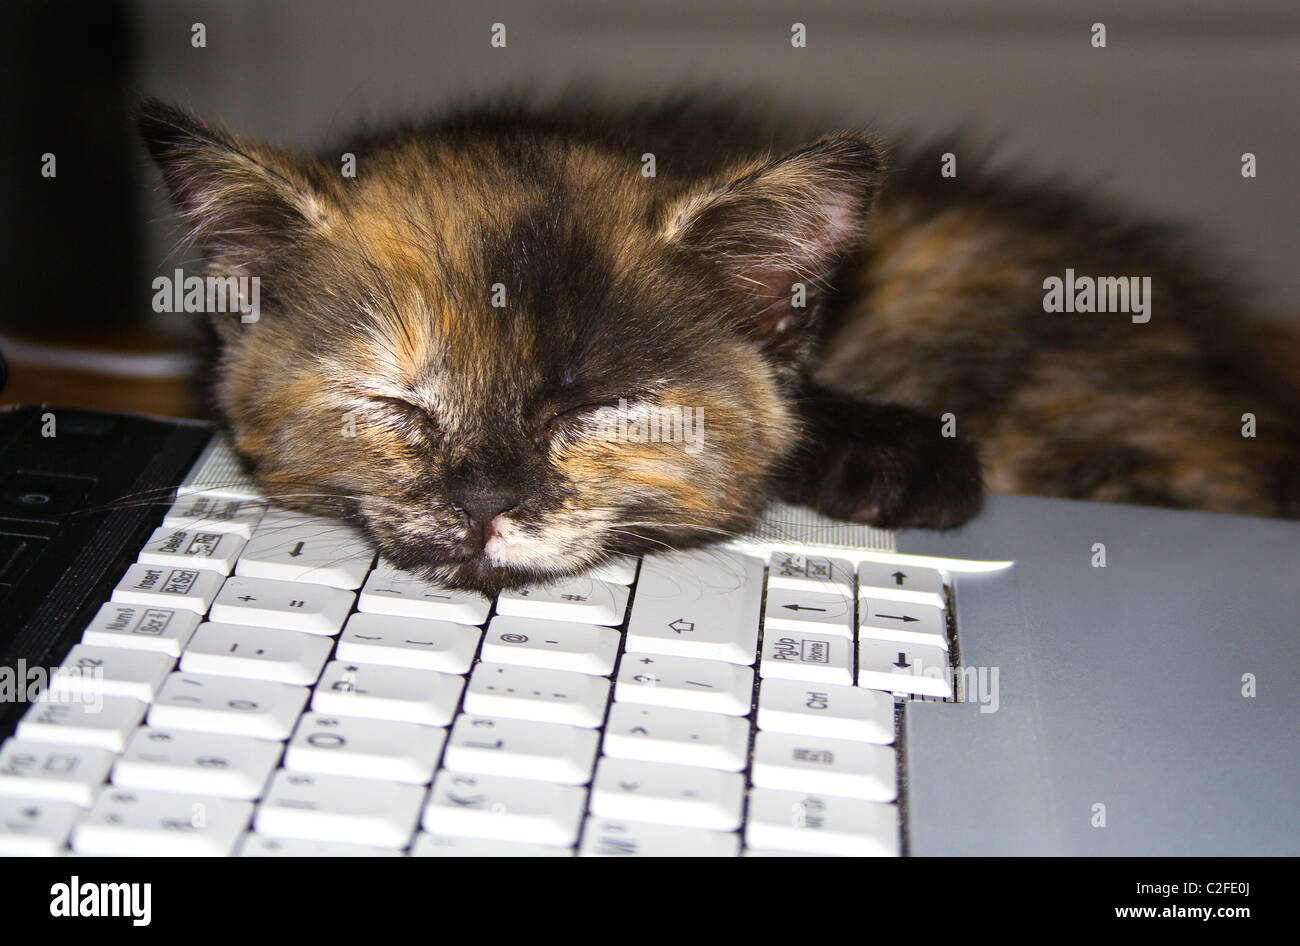 Computer cat nap Stock Photo